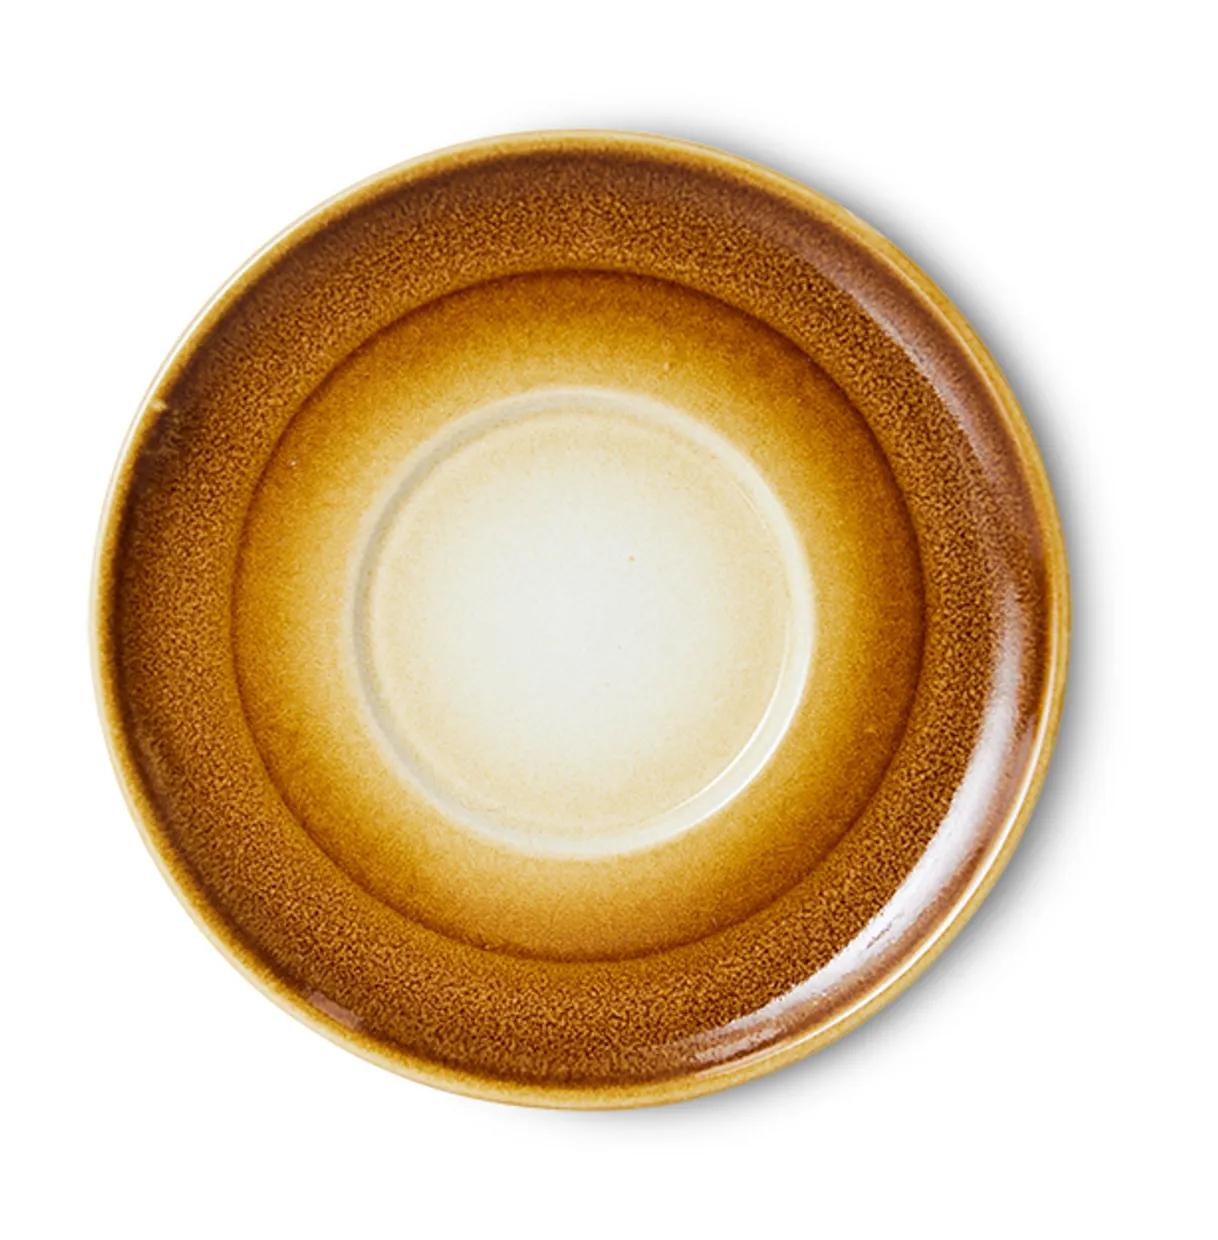 70s ceramics: saucers Big Sur (set of 4)